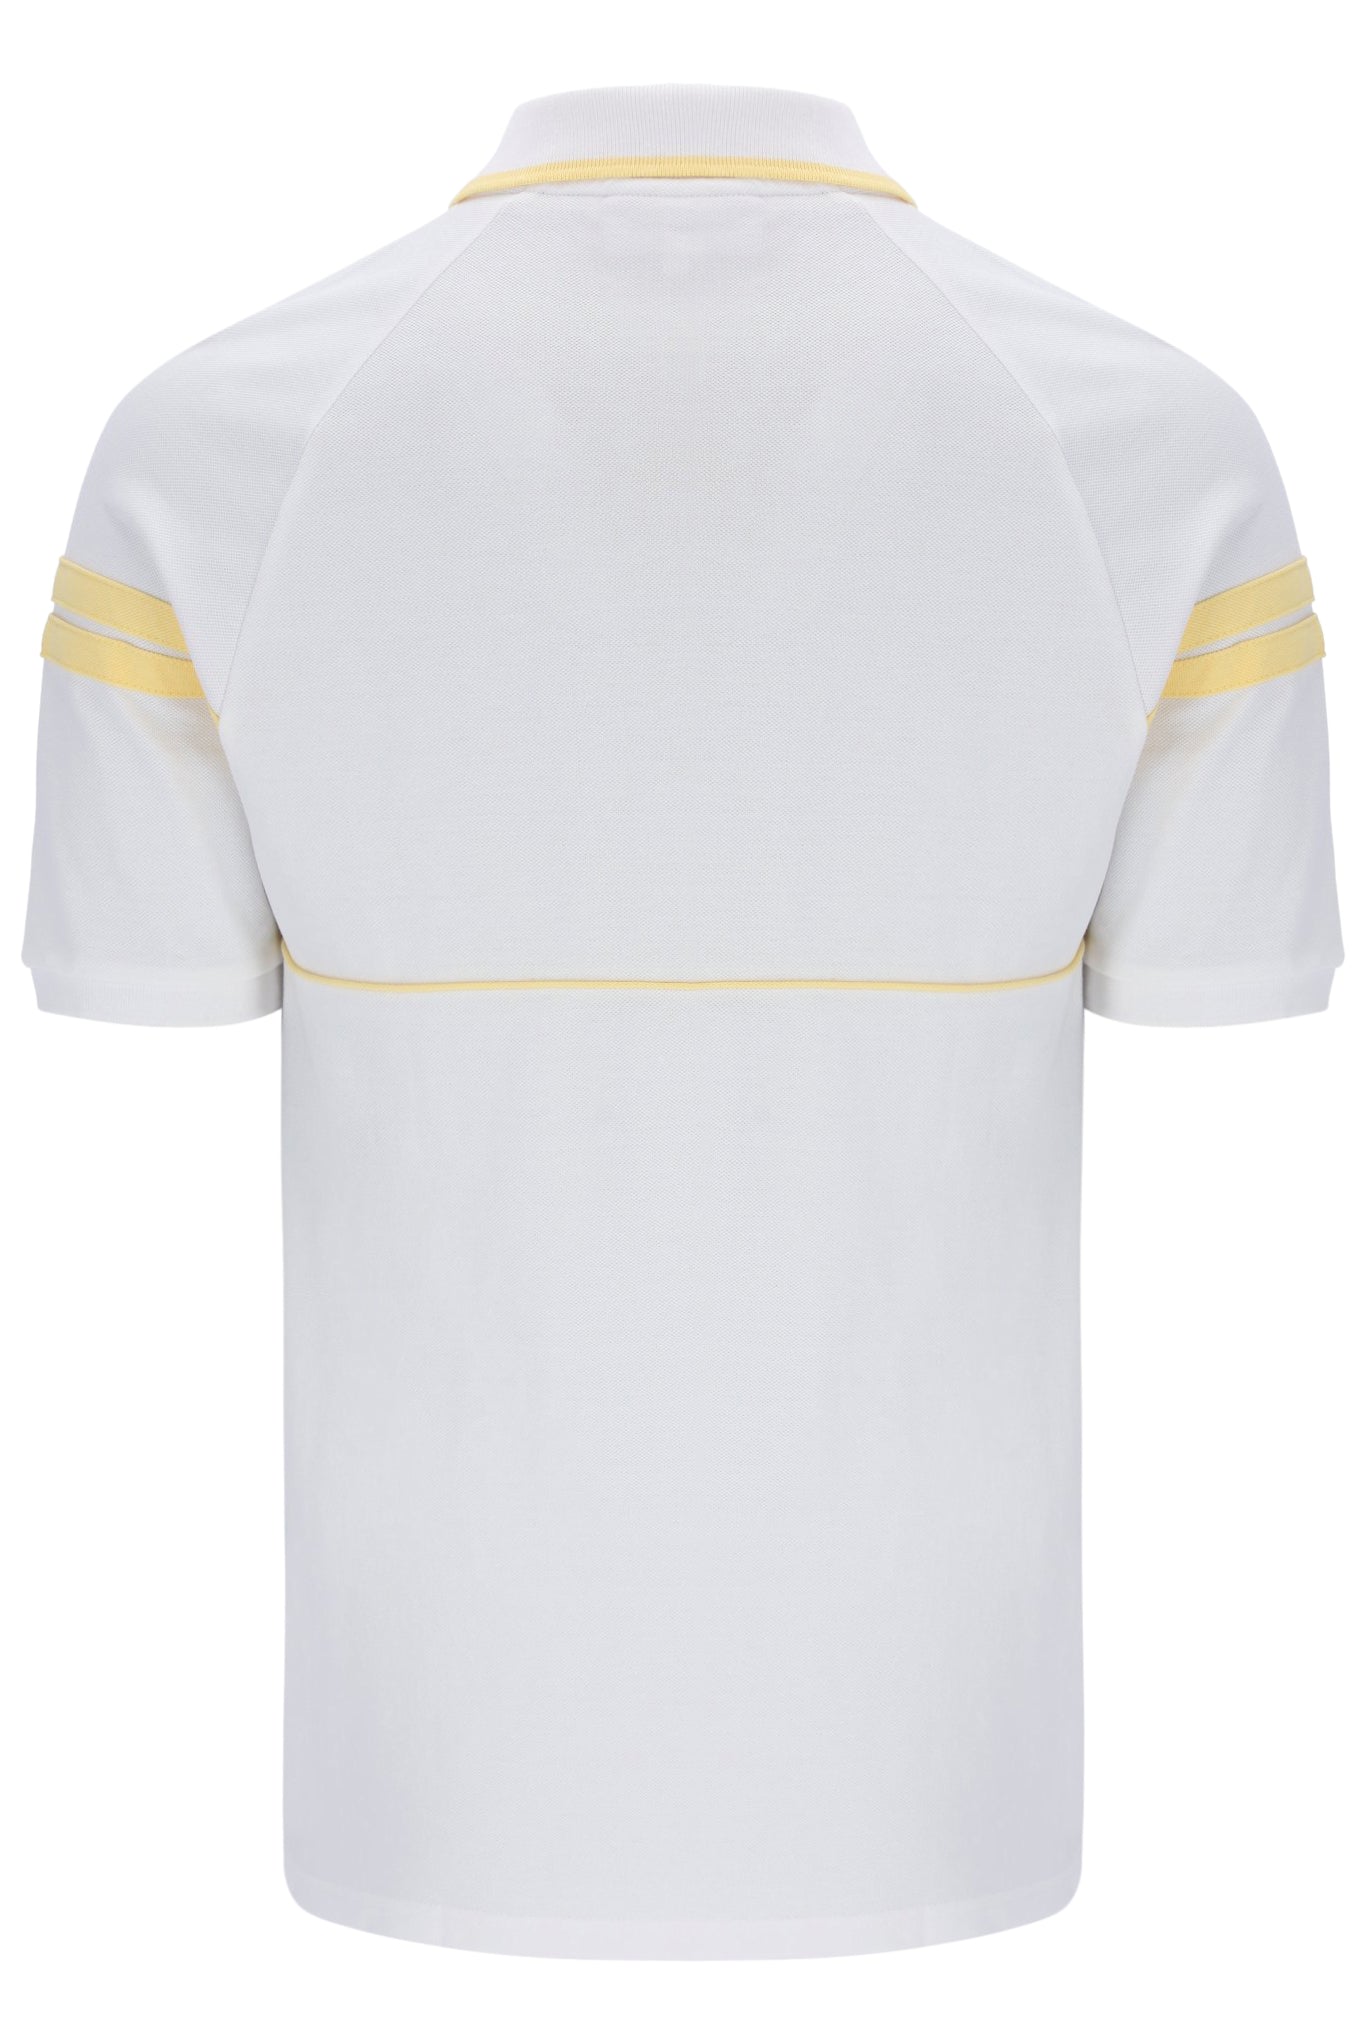 SERGIO TACCHINI Cambio Polo Shirt White & Golden